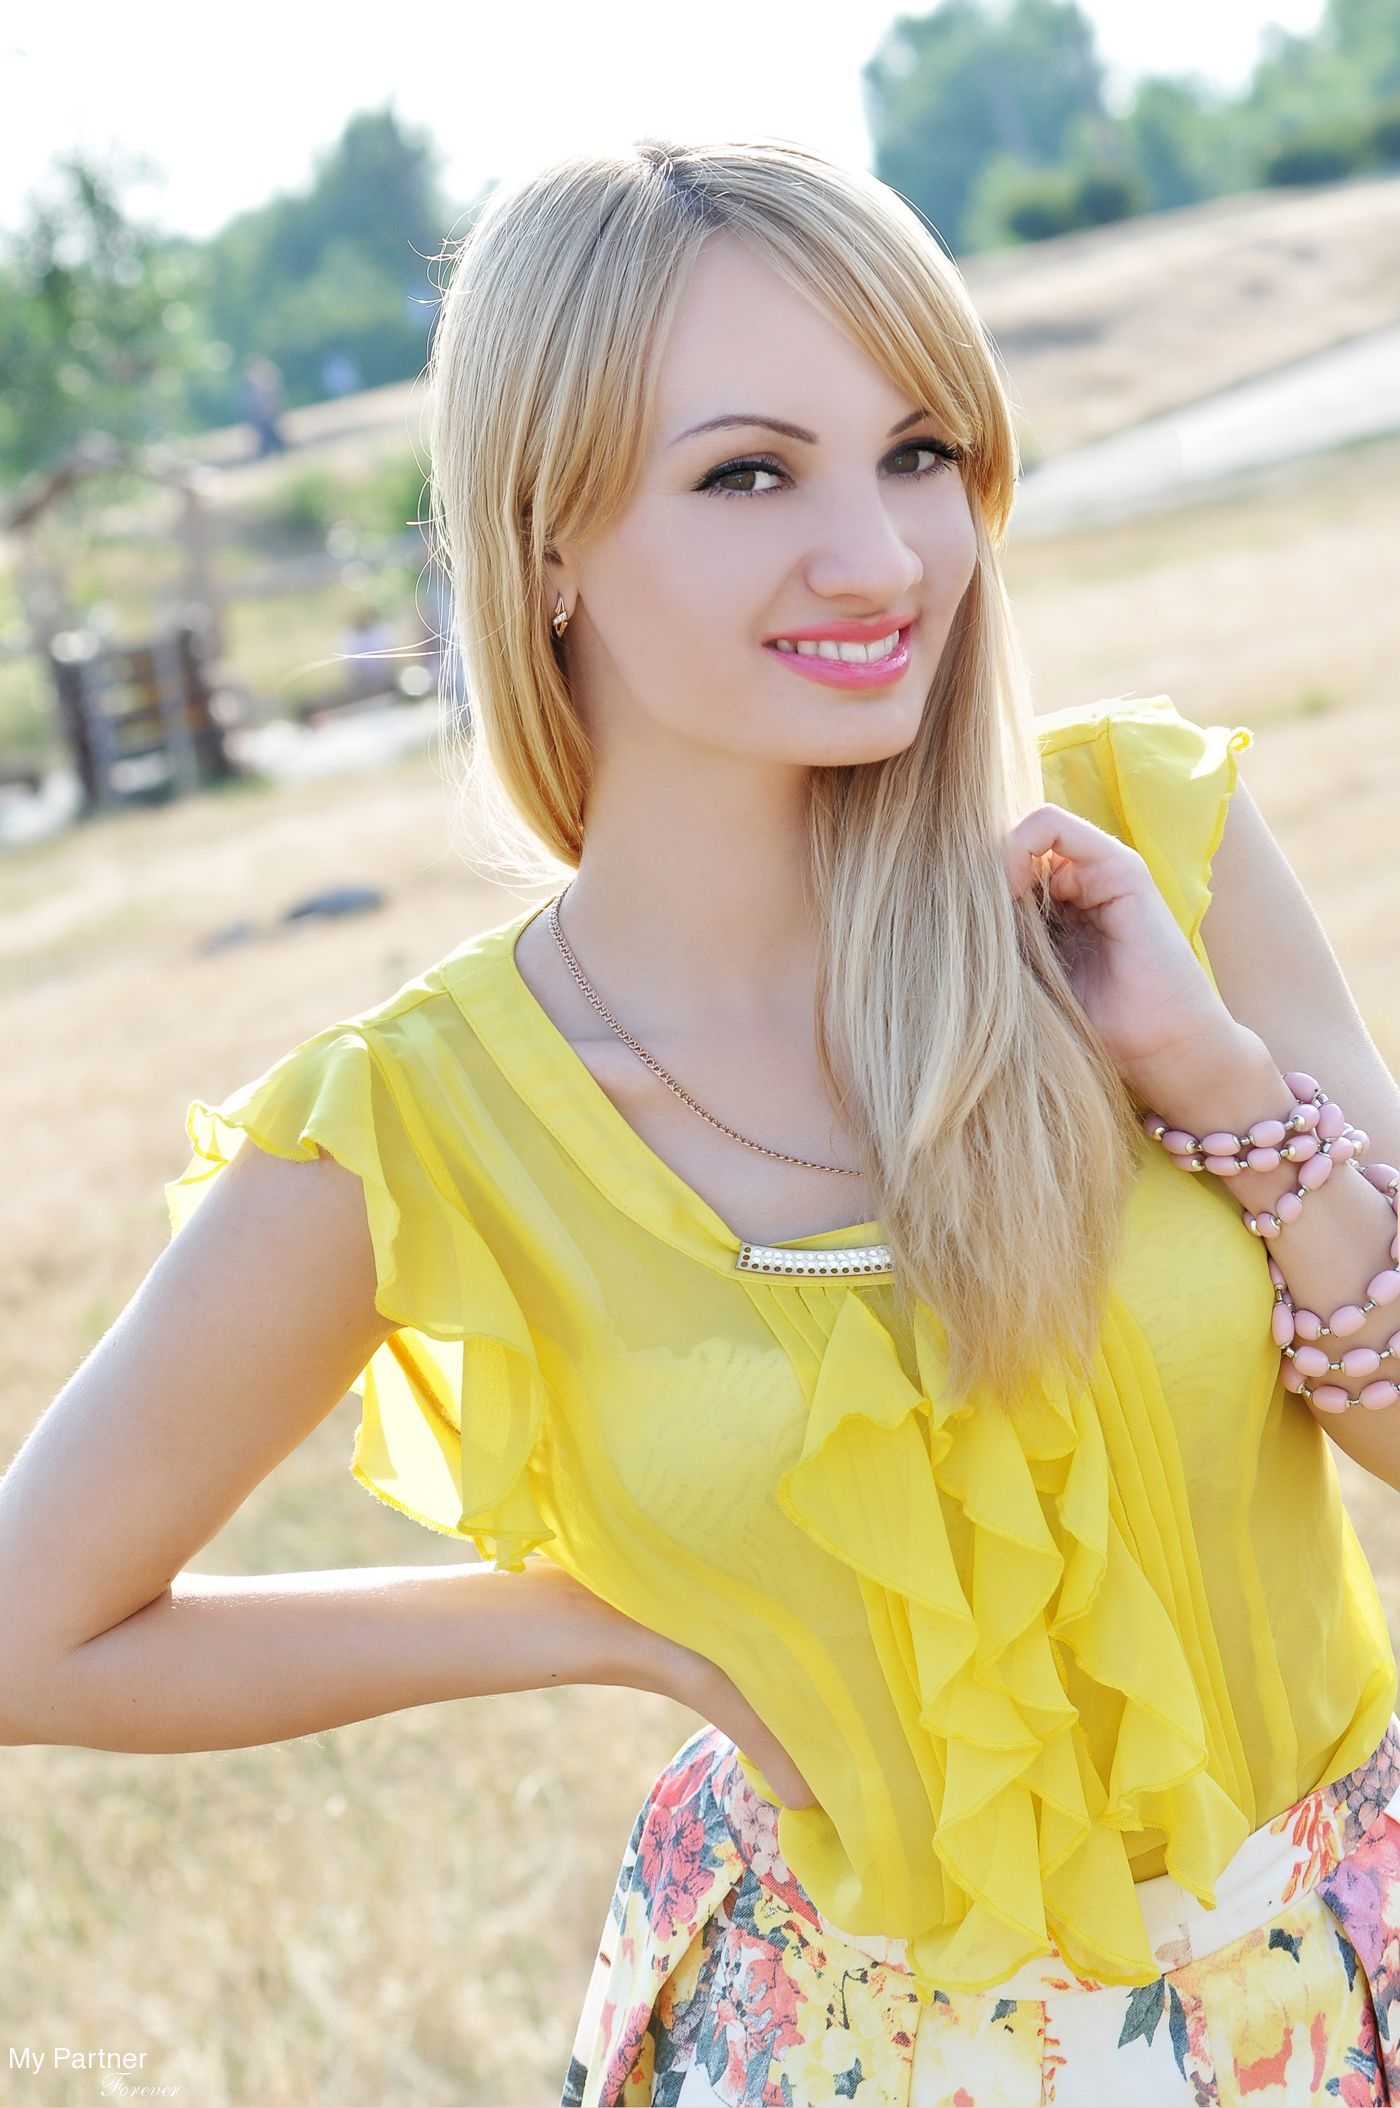 Stunning Girl from Ukraine - Oksana from Kiev, Ukraine